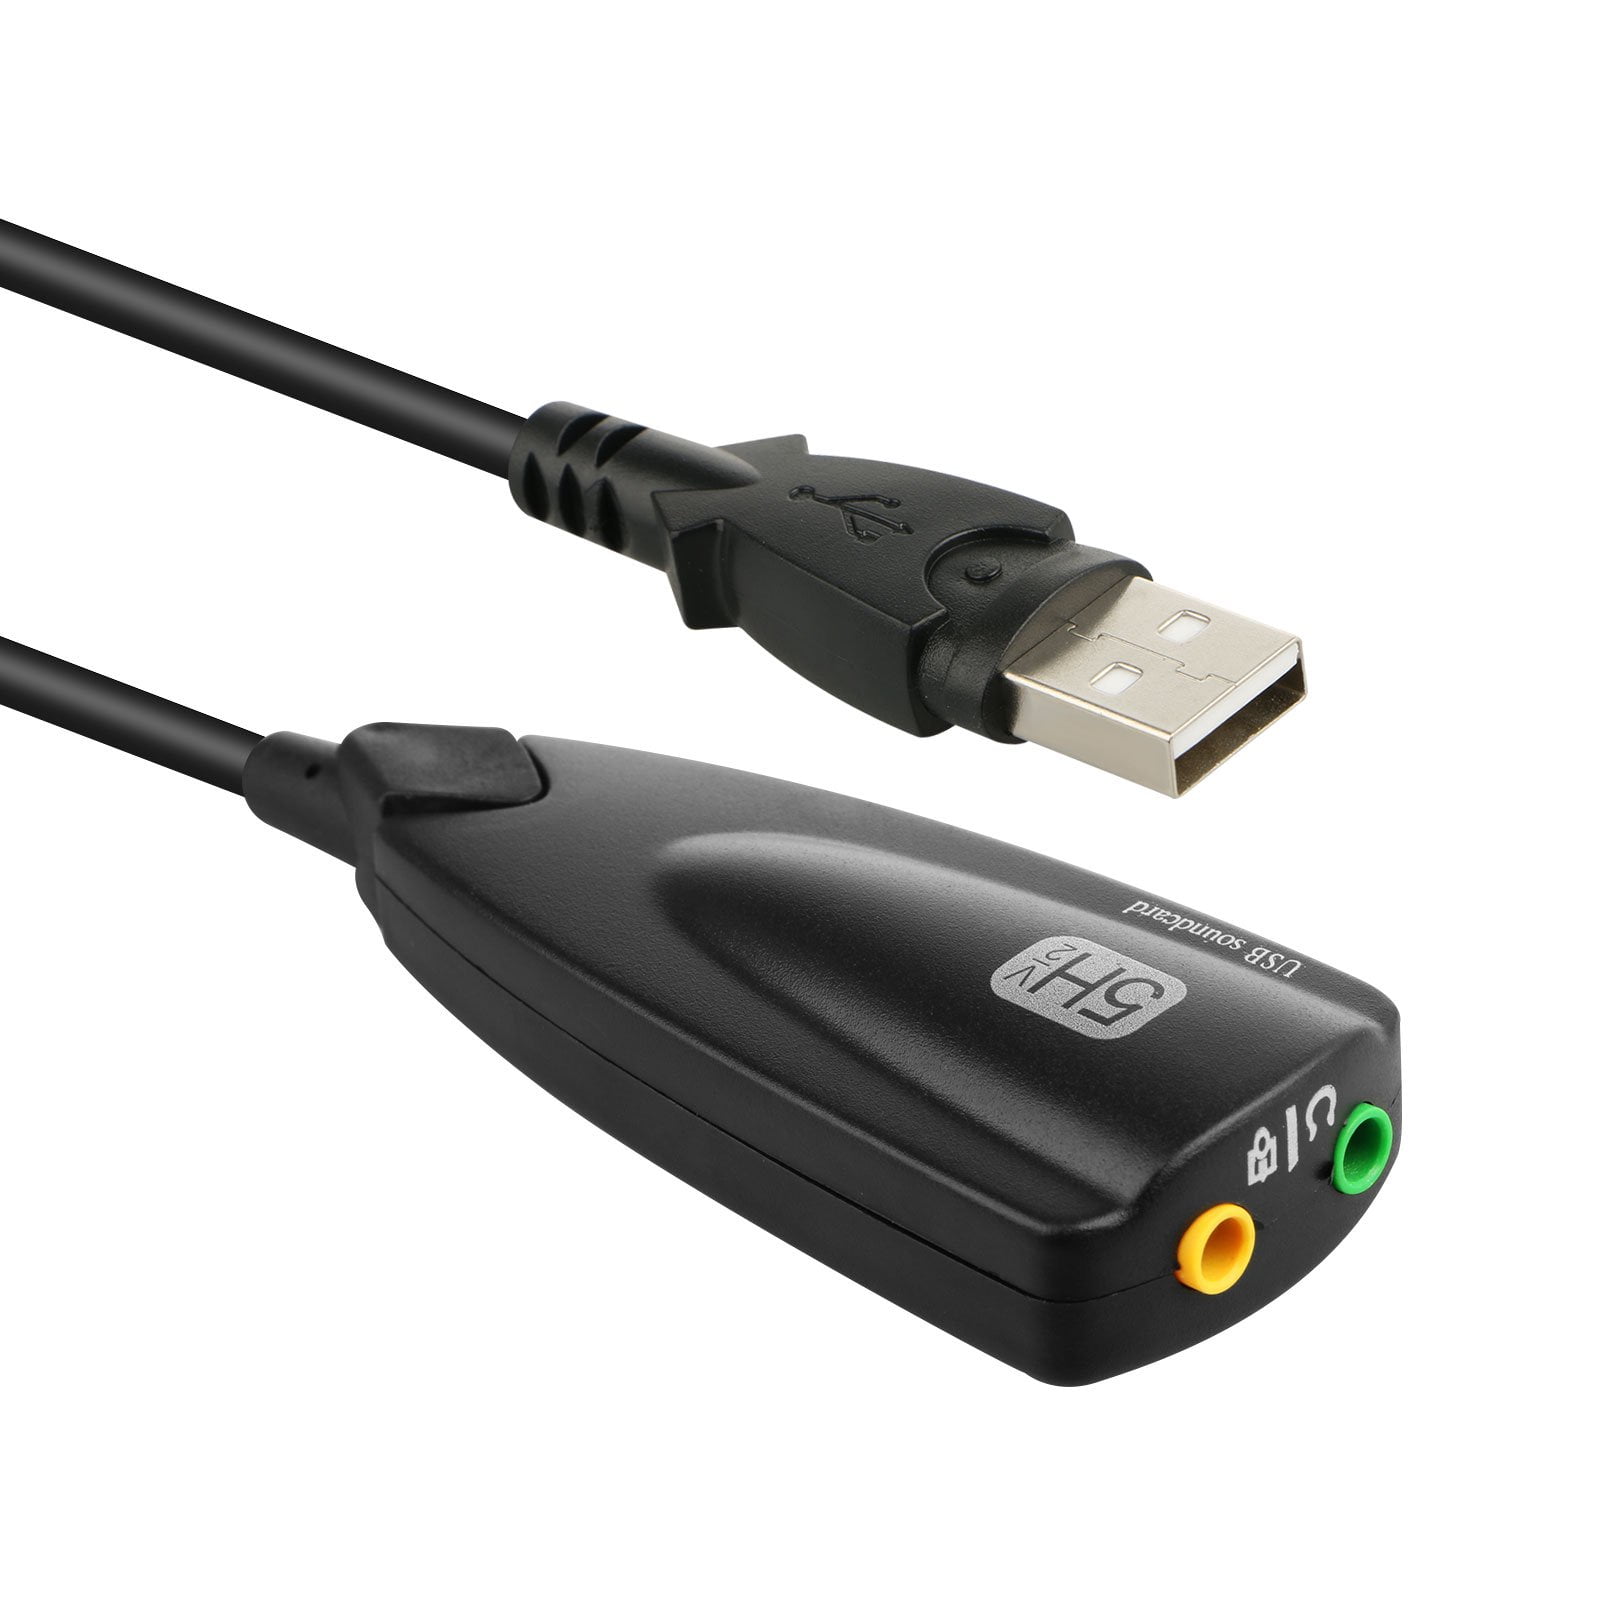 Nebu lol Transistor USB Audio Adapter, EEEkit USB to 3.5mm Microphone Headphone Jack Audio  Adapter 7.1 External USB Sound Card Adapter Converter Fit for Desktop PC  Laptop, Black - Walmart.com